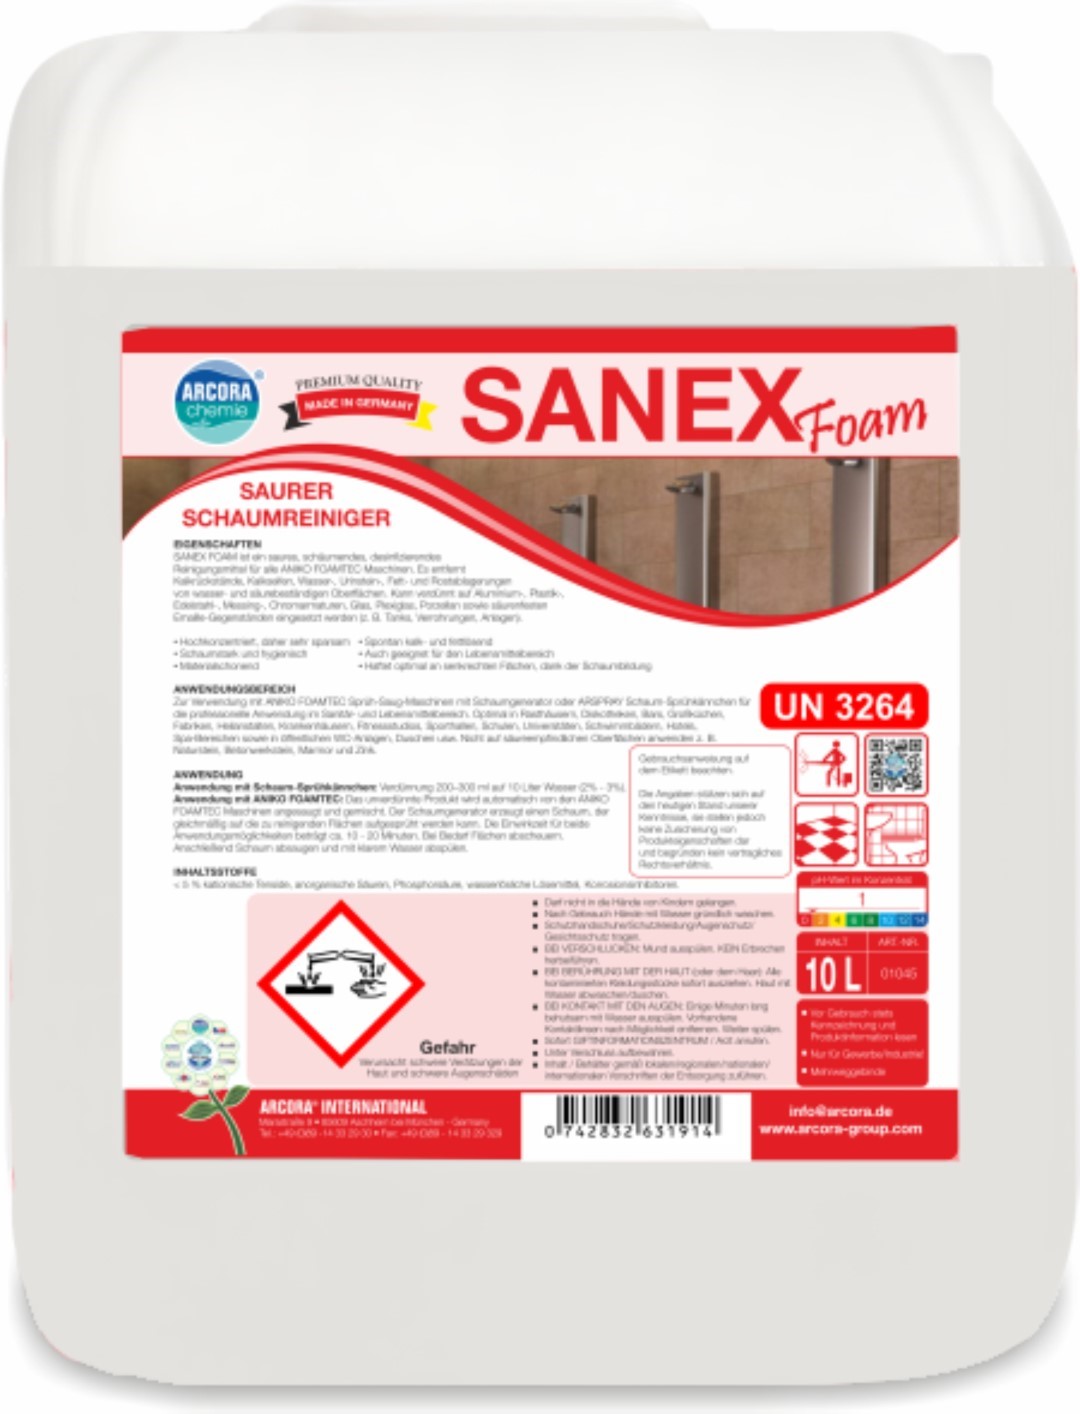 Sanex Foam | saurer Schaum- & Oberflächenreiniger | 10 Liter Kanister